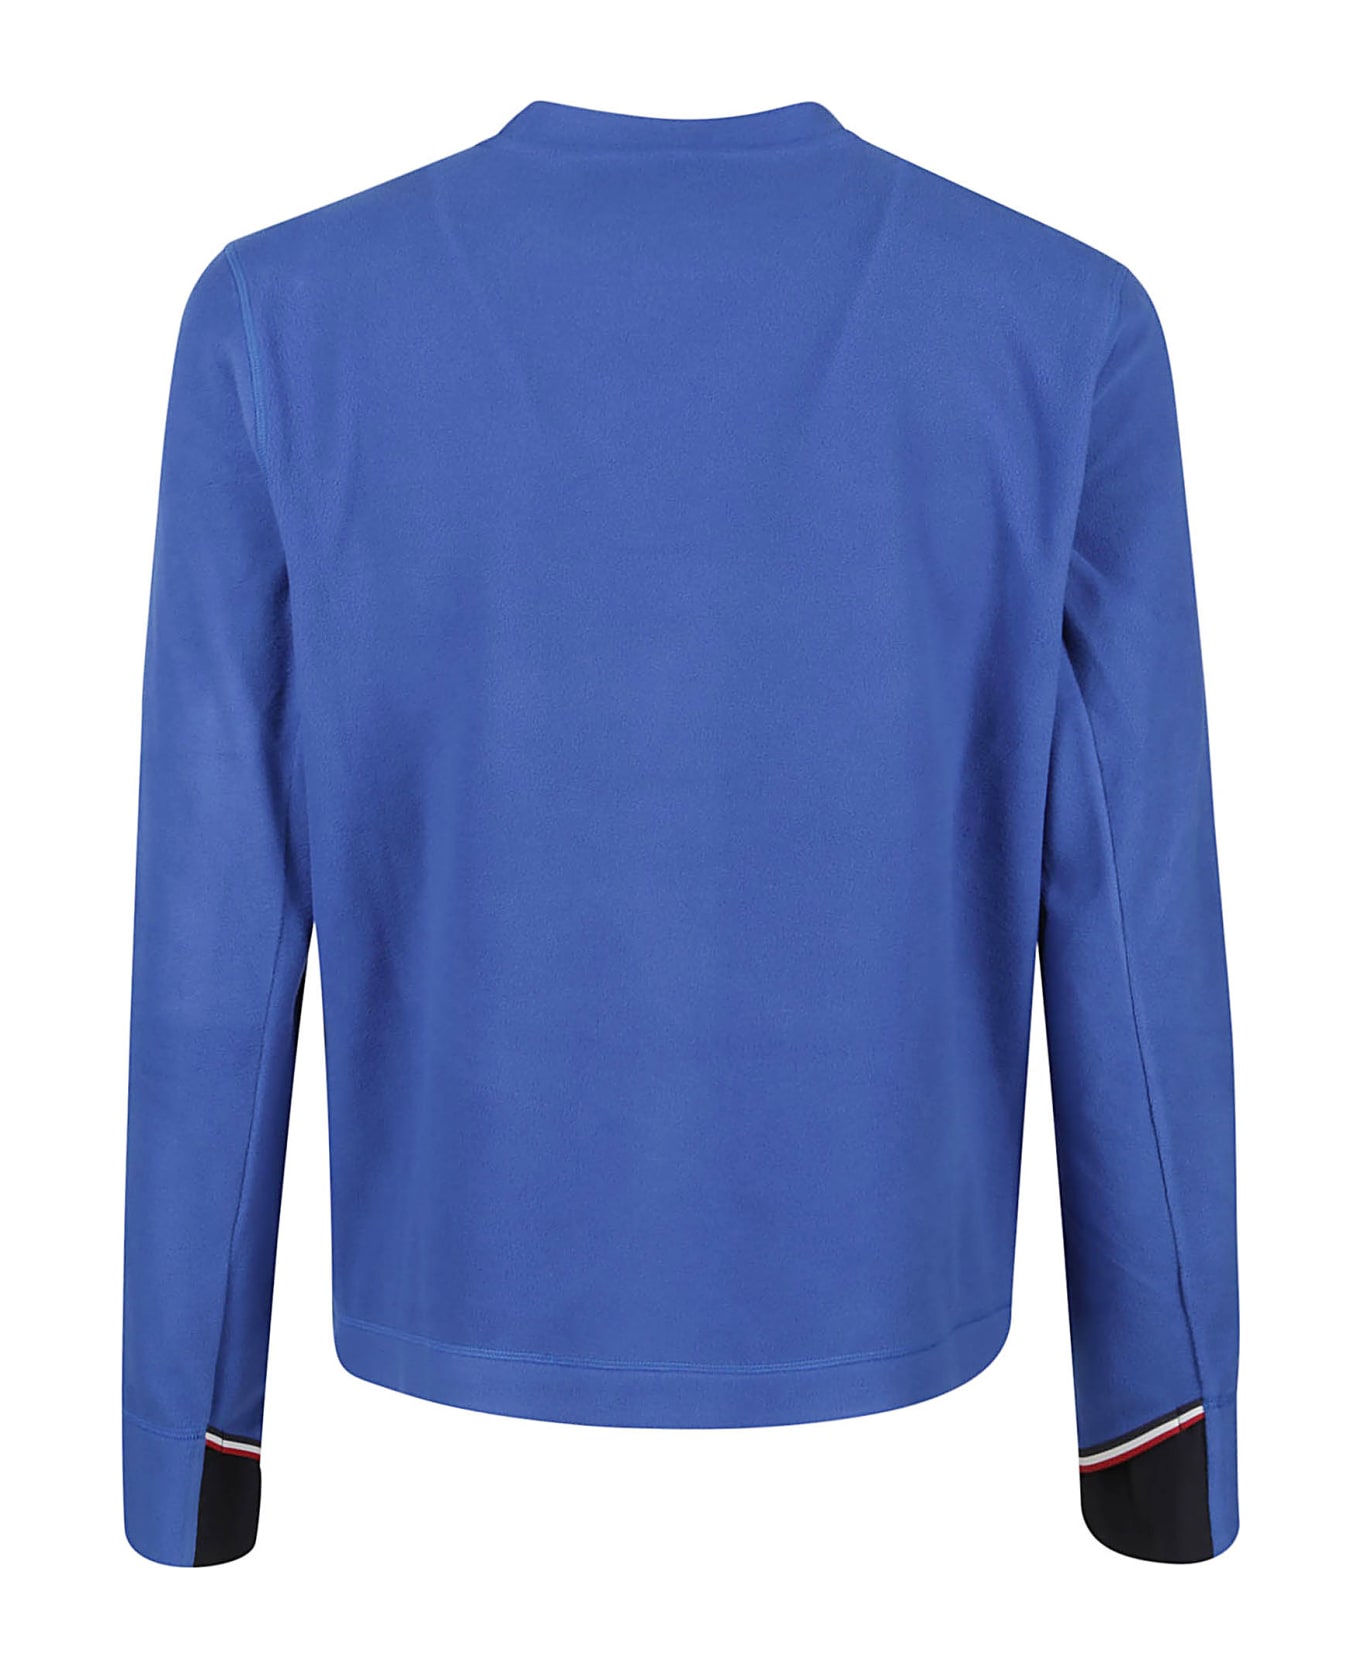 Moncler Grenoble Sweatshirt - G Bluette